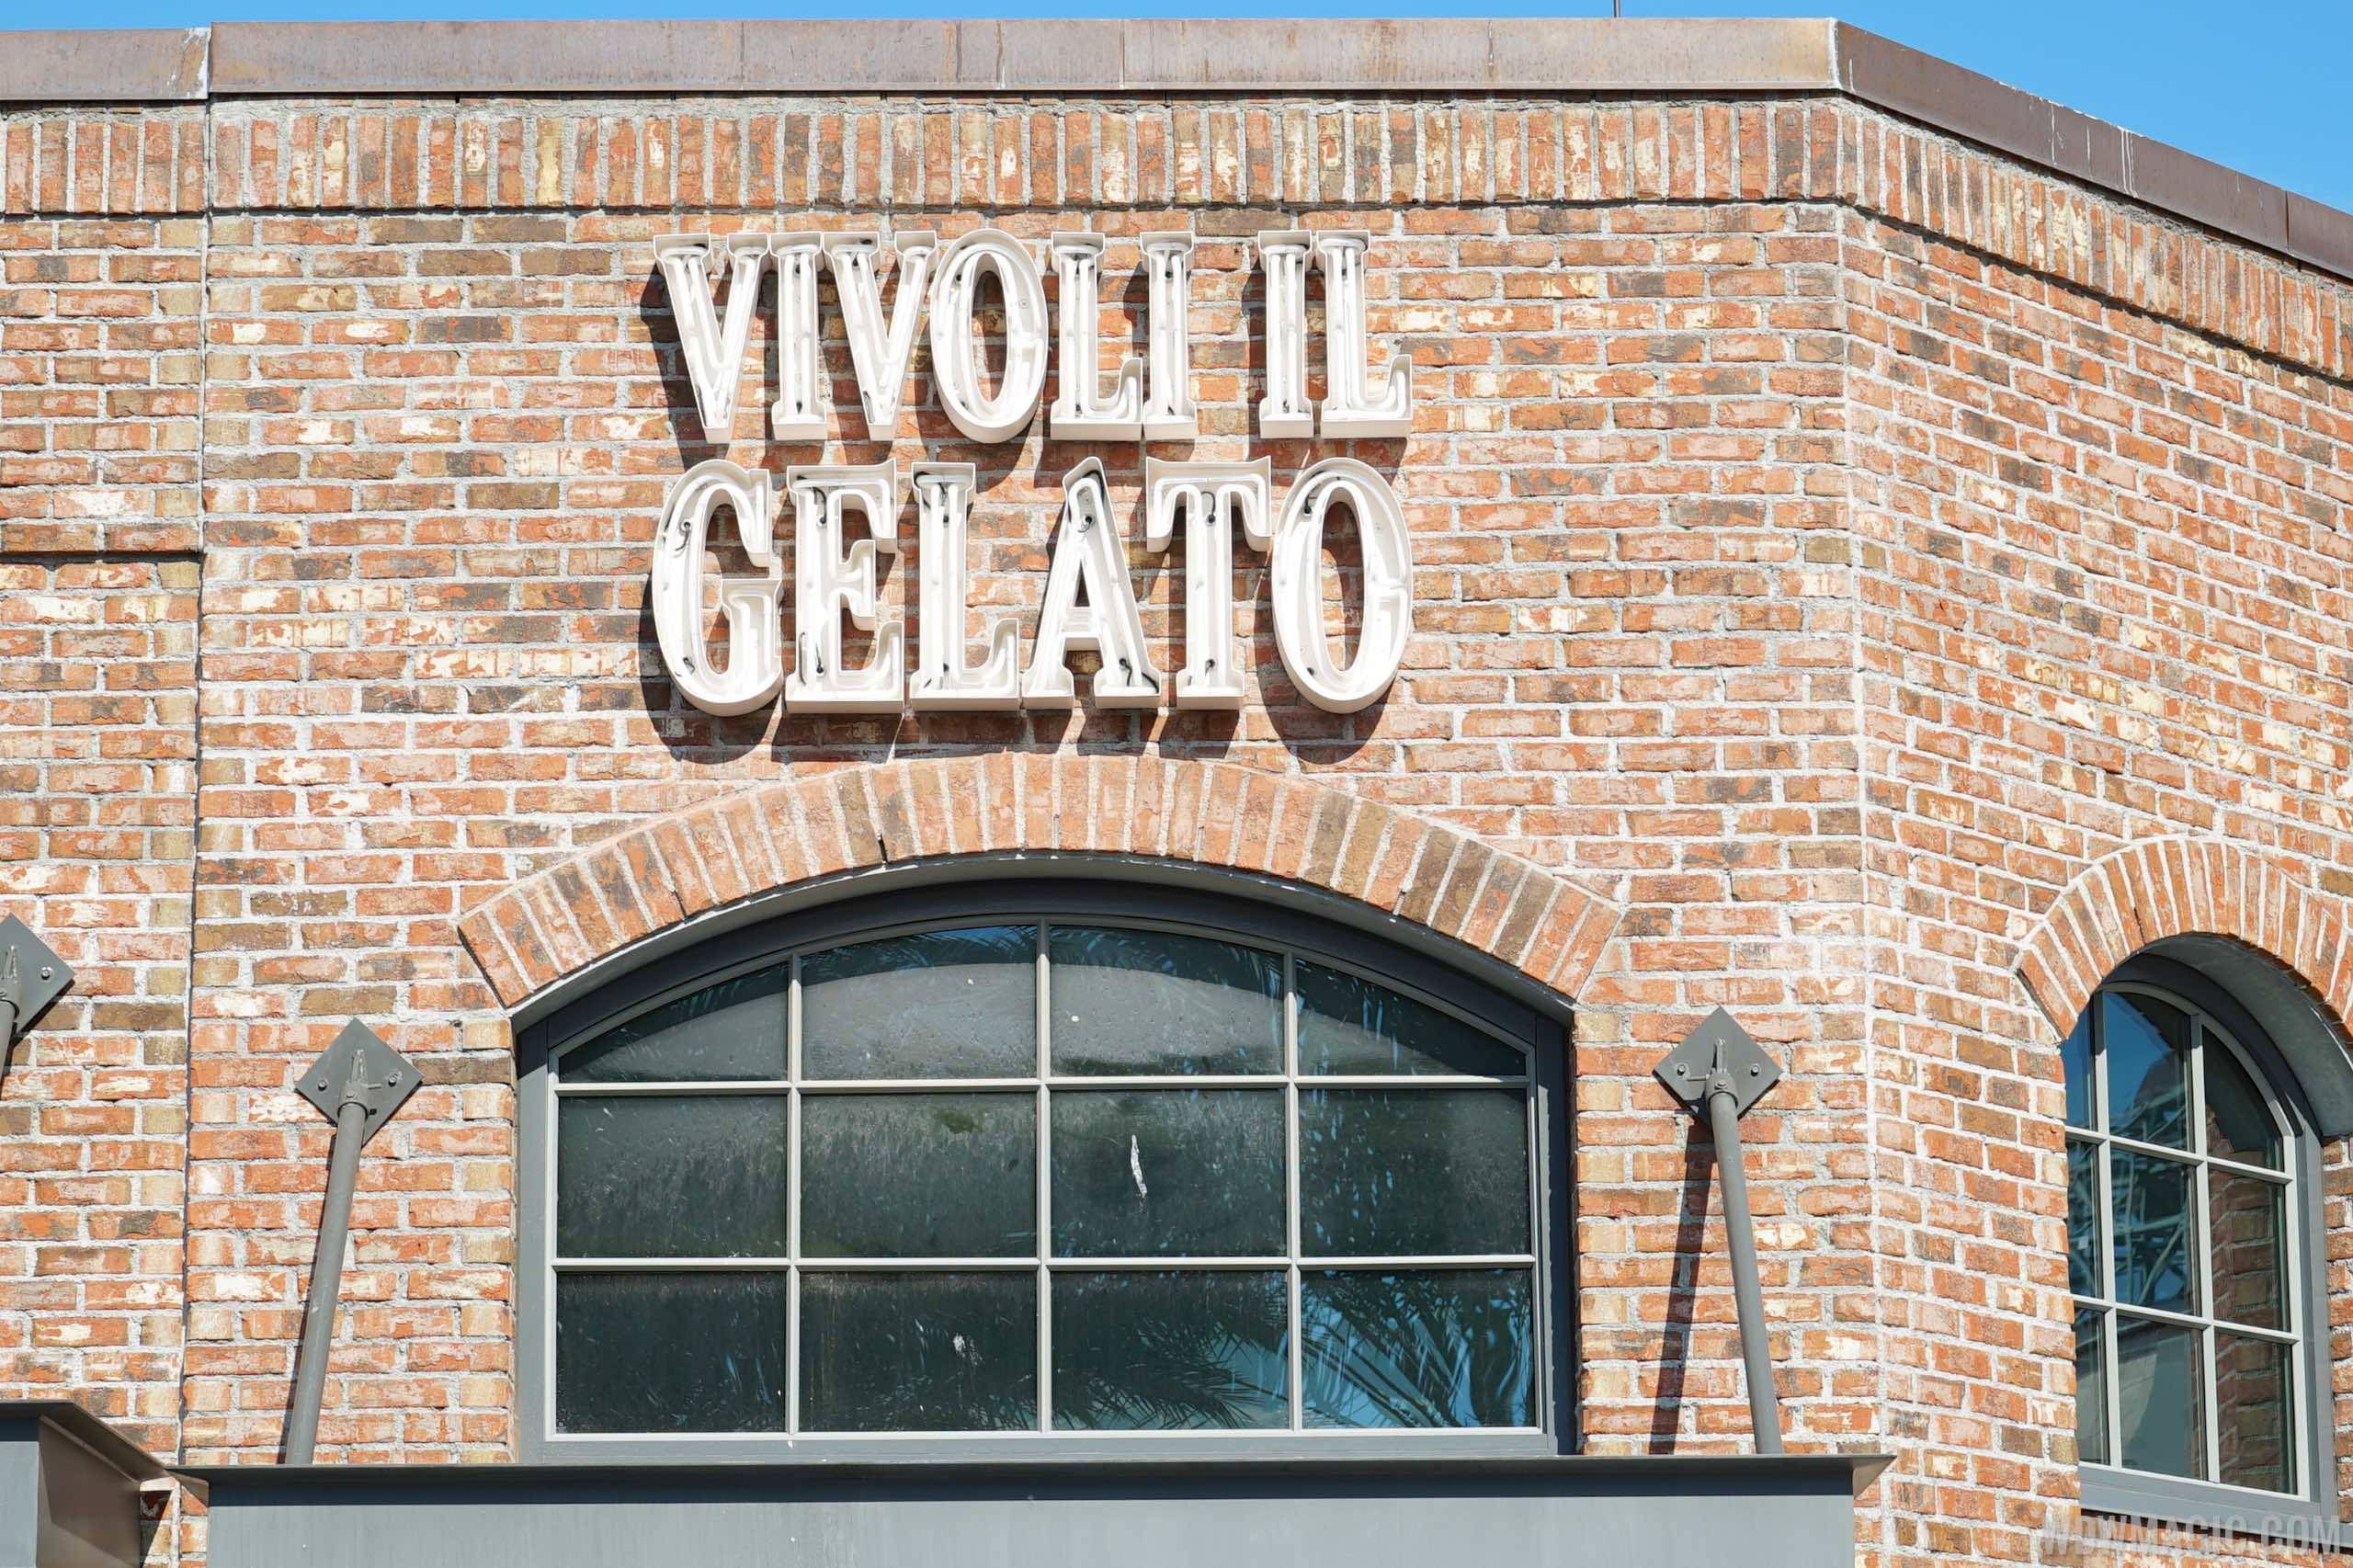 PHOTOS - A look at Vivoli Gelateria as it nears opening at Disney Springs